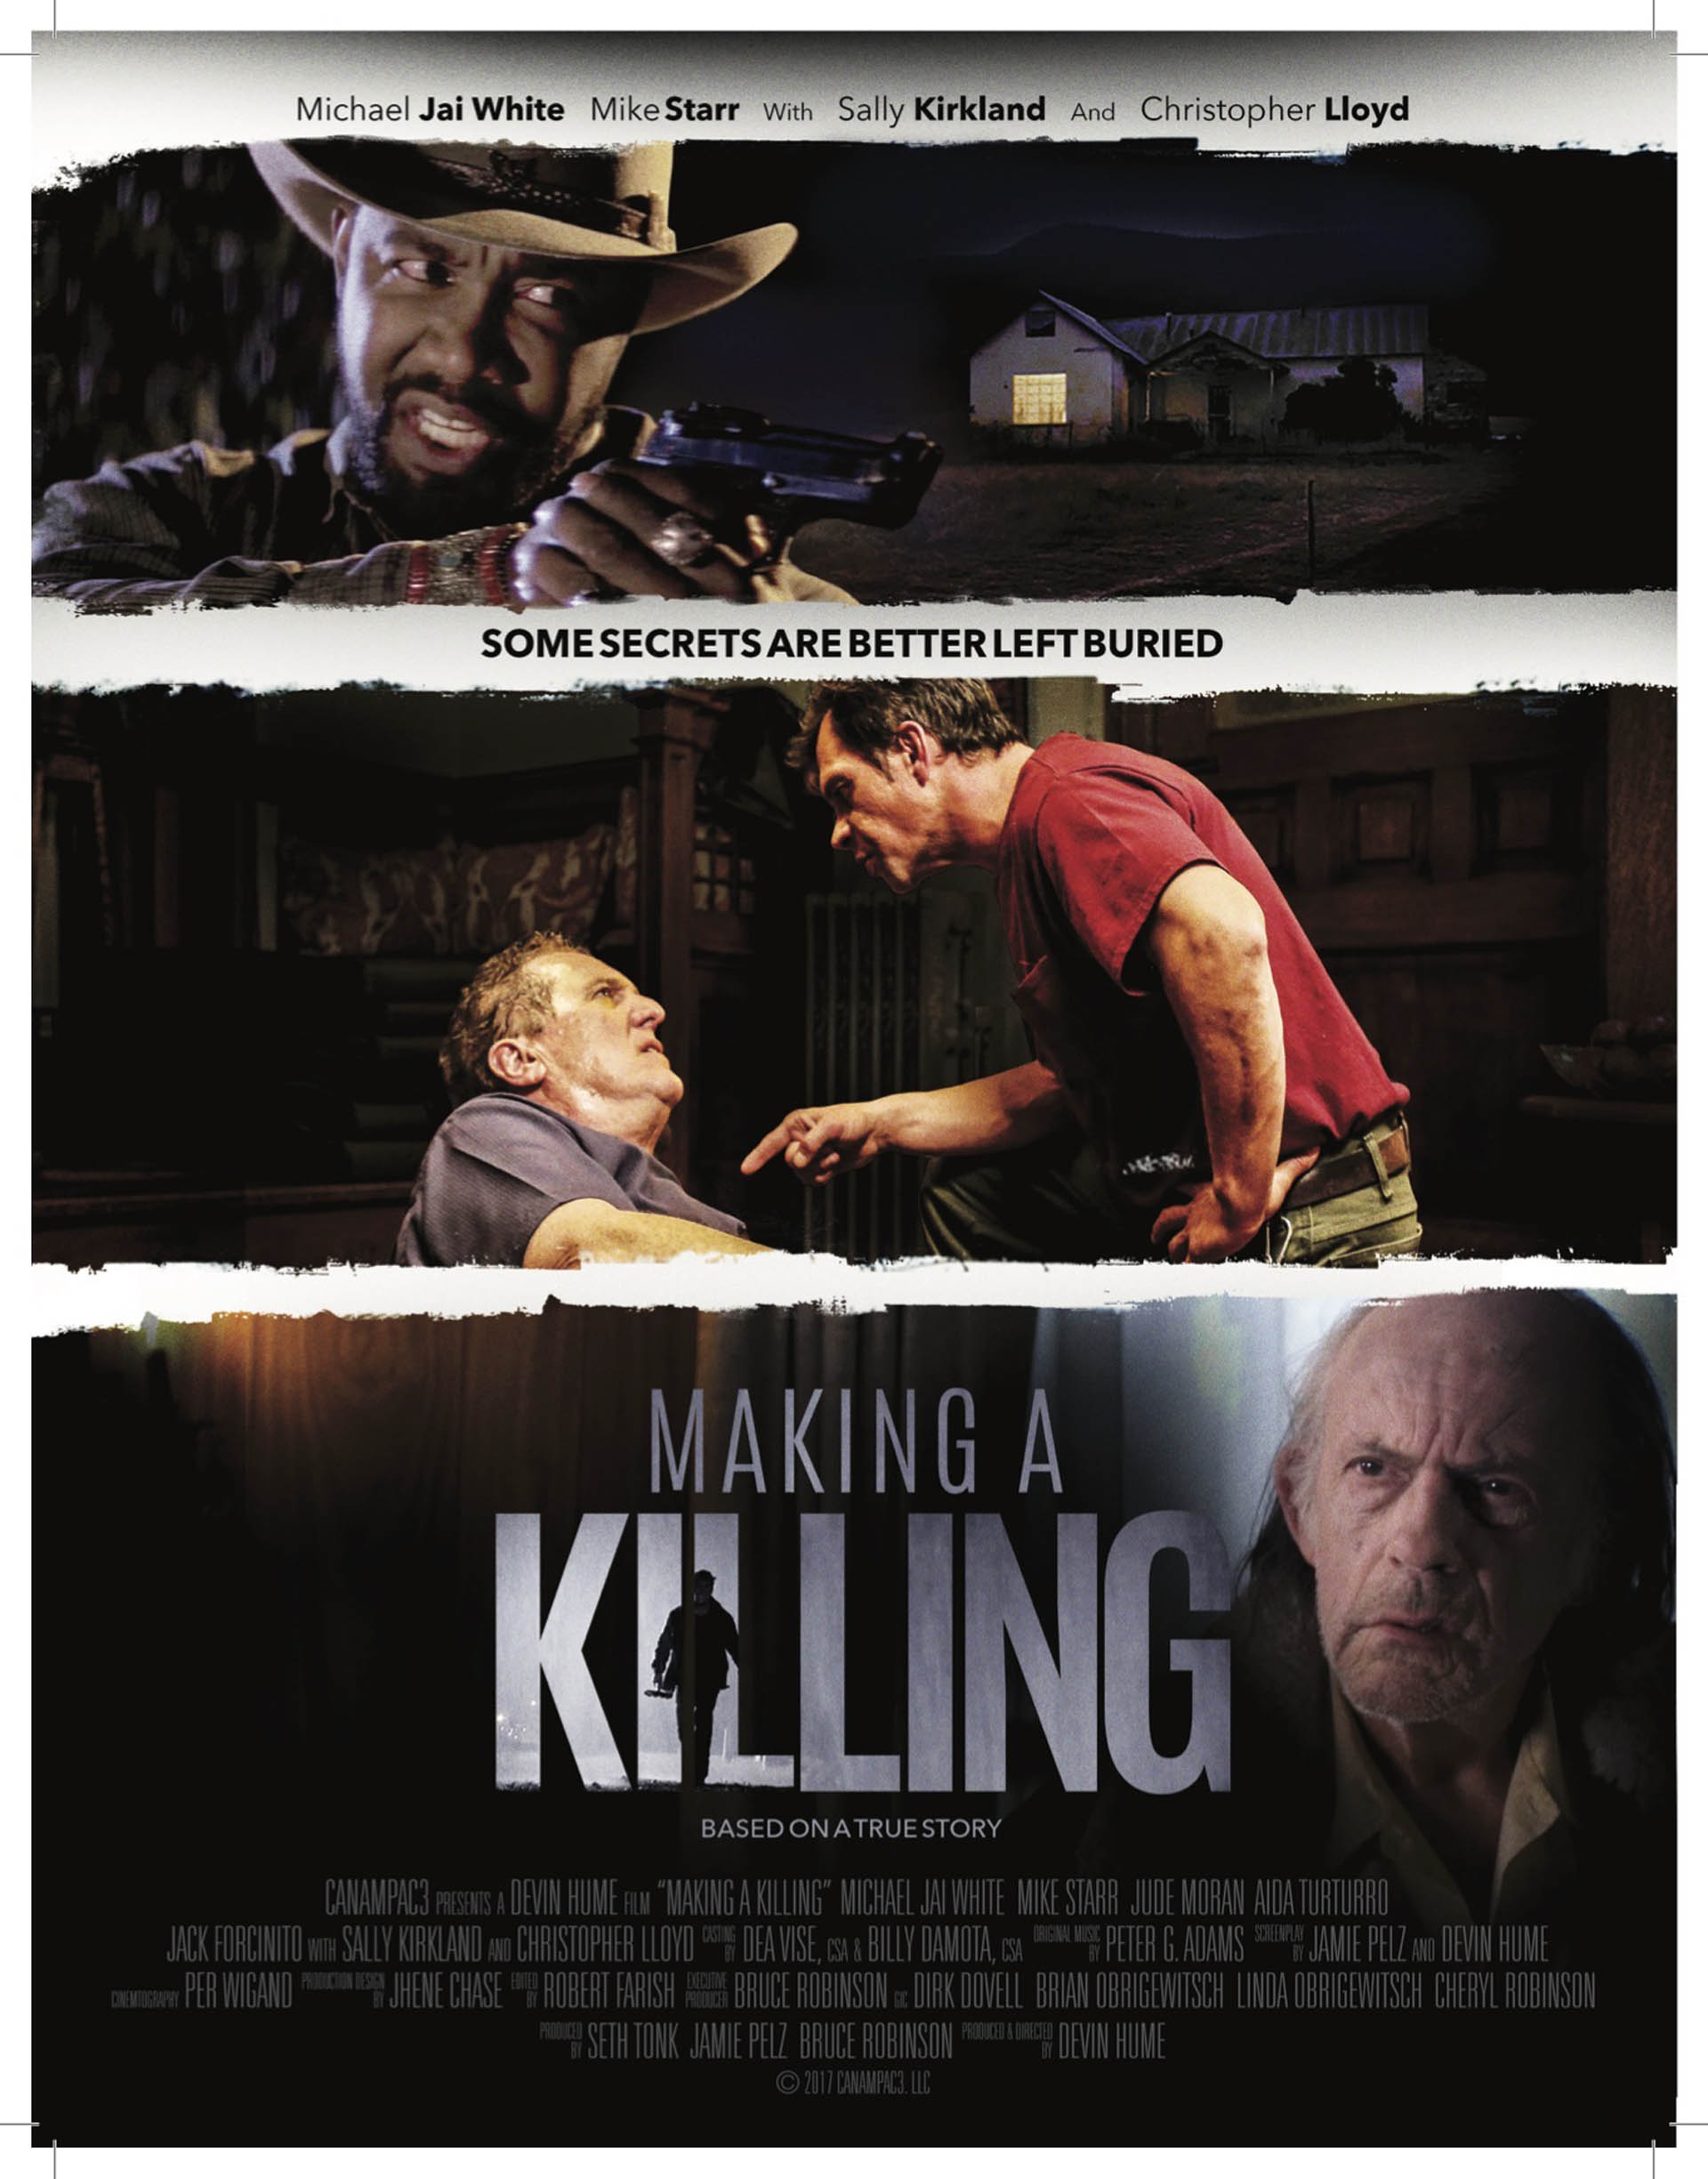 Making A Killing poster.jpg